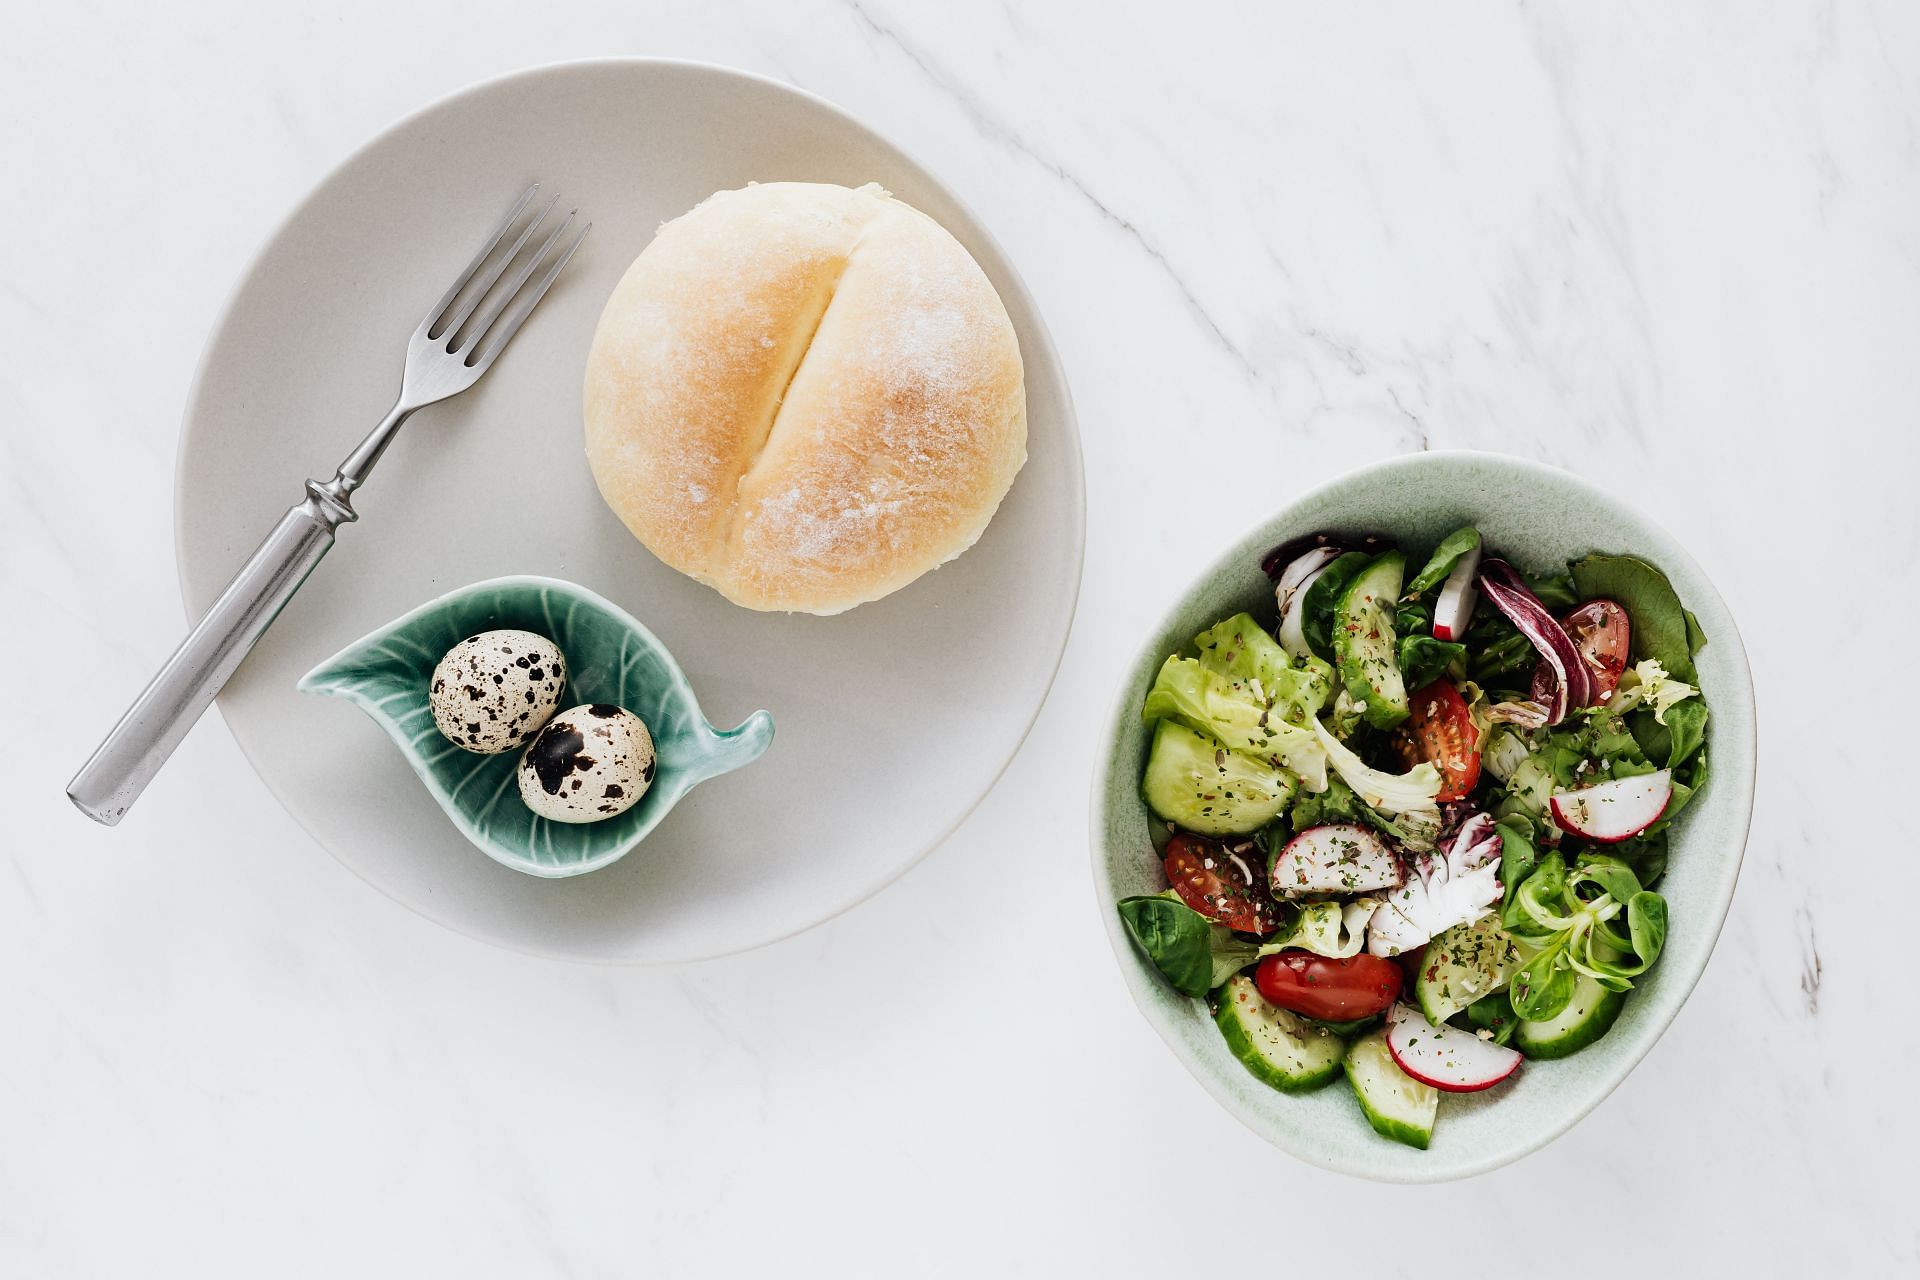 Superfoods can provide you strength and stamina (Image via Pexels/Karolina Grabowska)